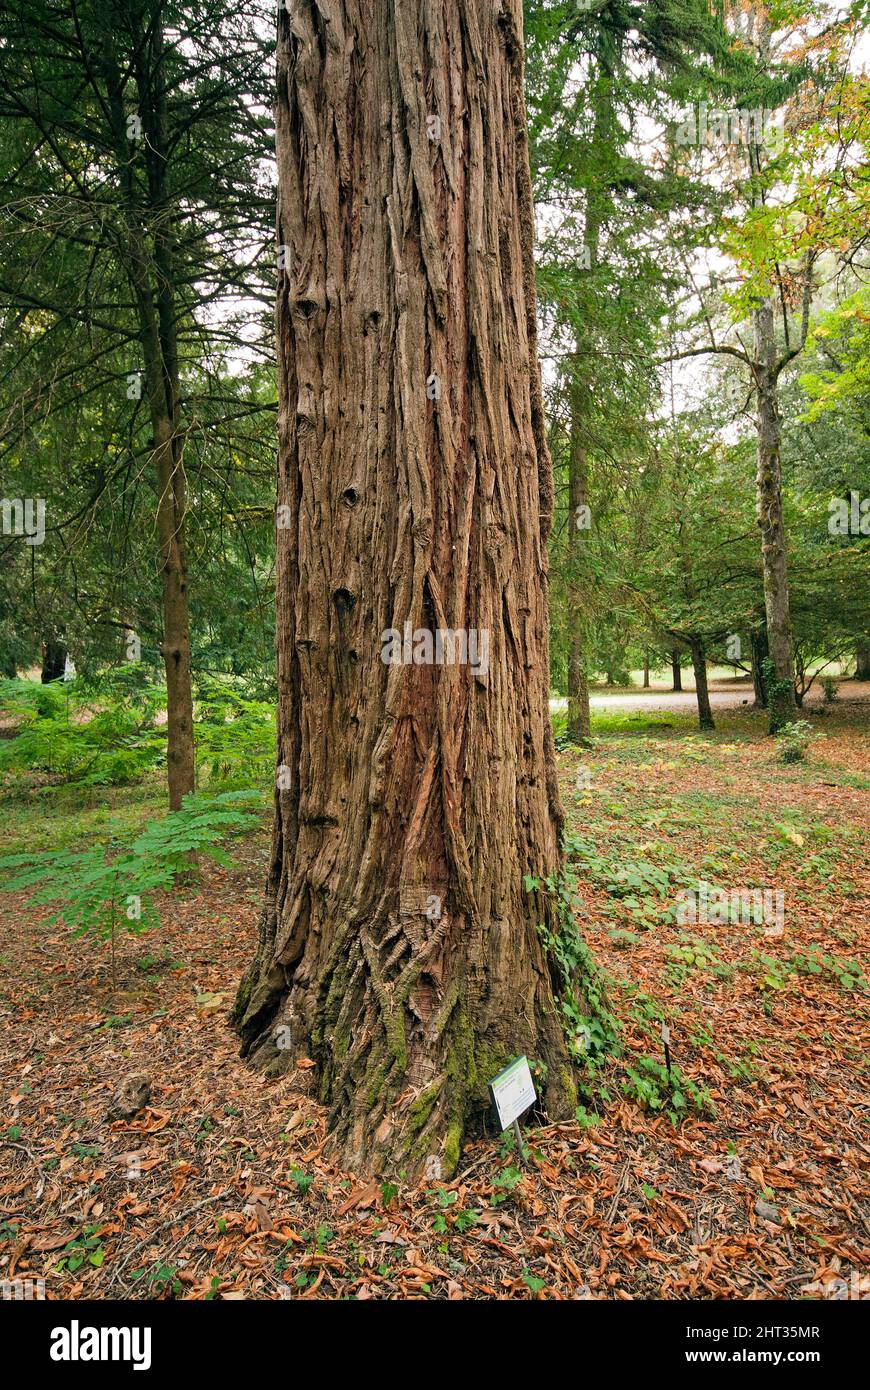 Incense cedar tree (Calocedrus decurrens or Libocedrus decurrens) in 'La Montesca' Park, Città di Castello, Upper Tiber Valley, Umbria, Italy Stock Photo